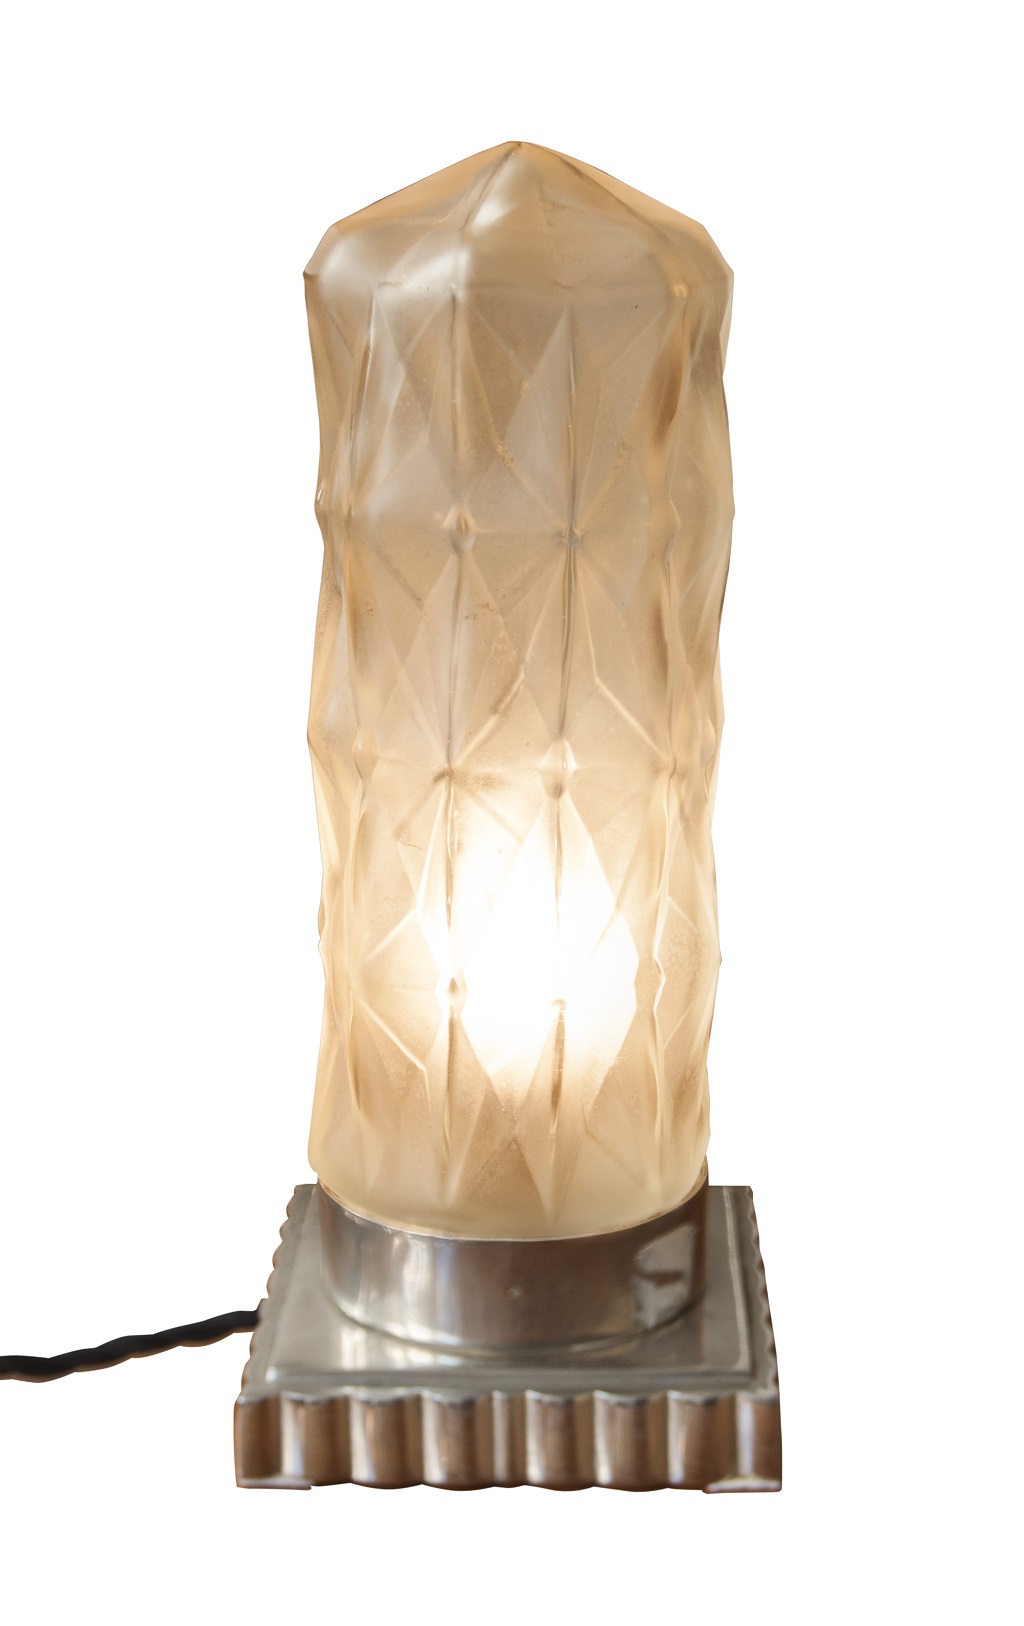 Cylindrical Art Deco table lamp on